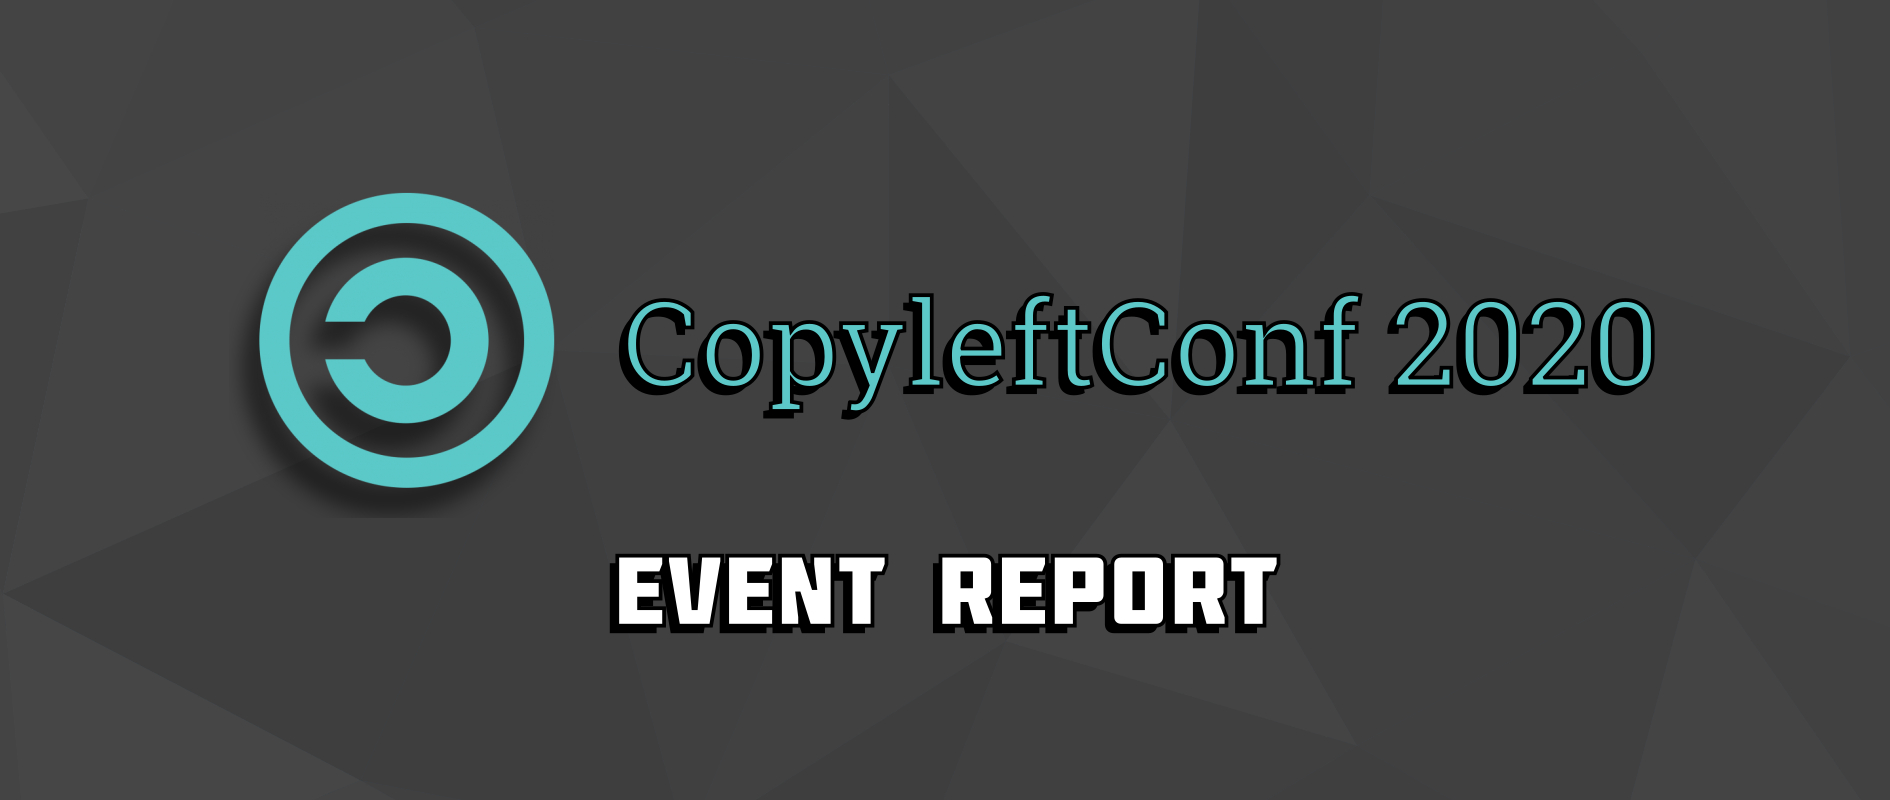 CopyleftConf 2020: quick rewind